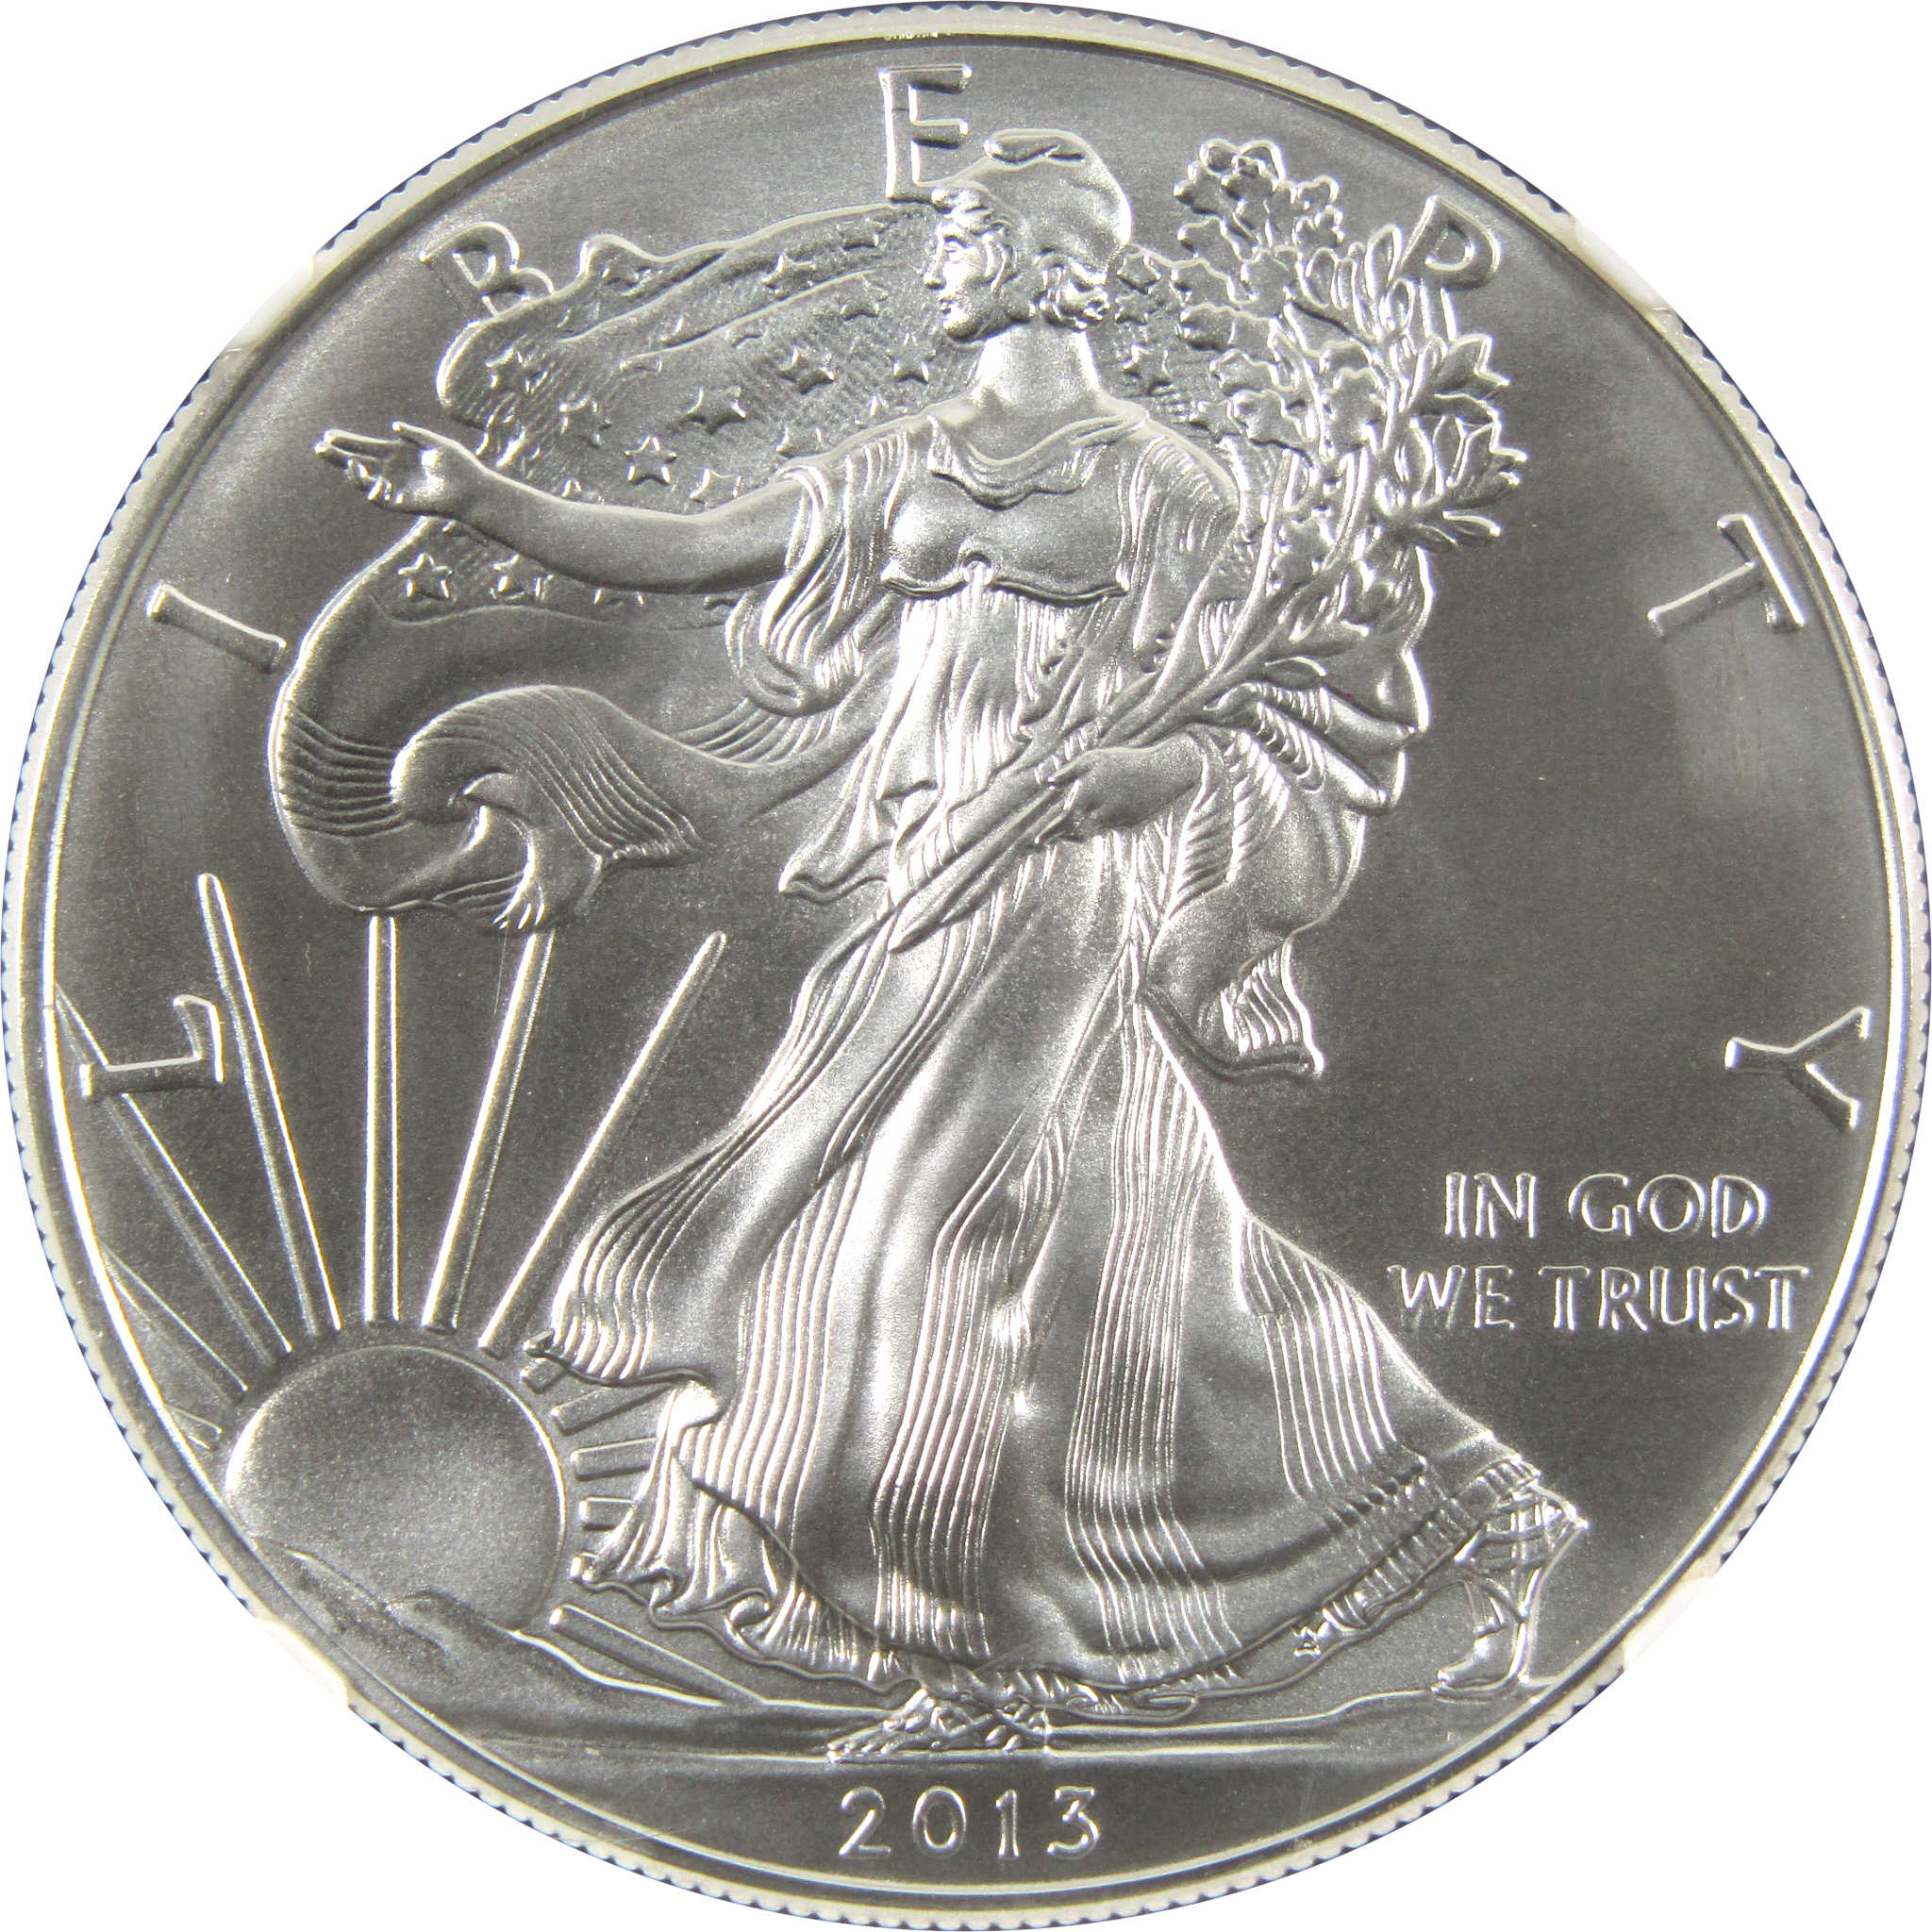 2013 American Eagle Dollar MS 70 NGC 1 oz .999 Silver SKU:CPC4762